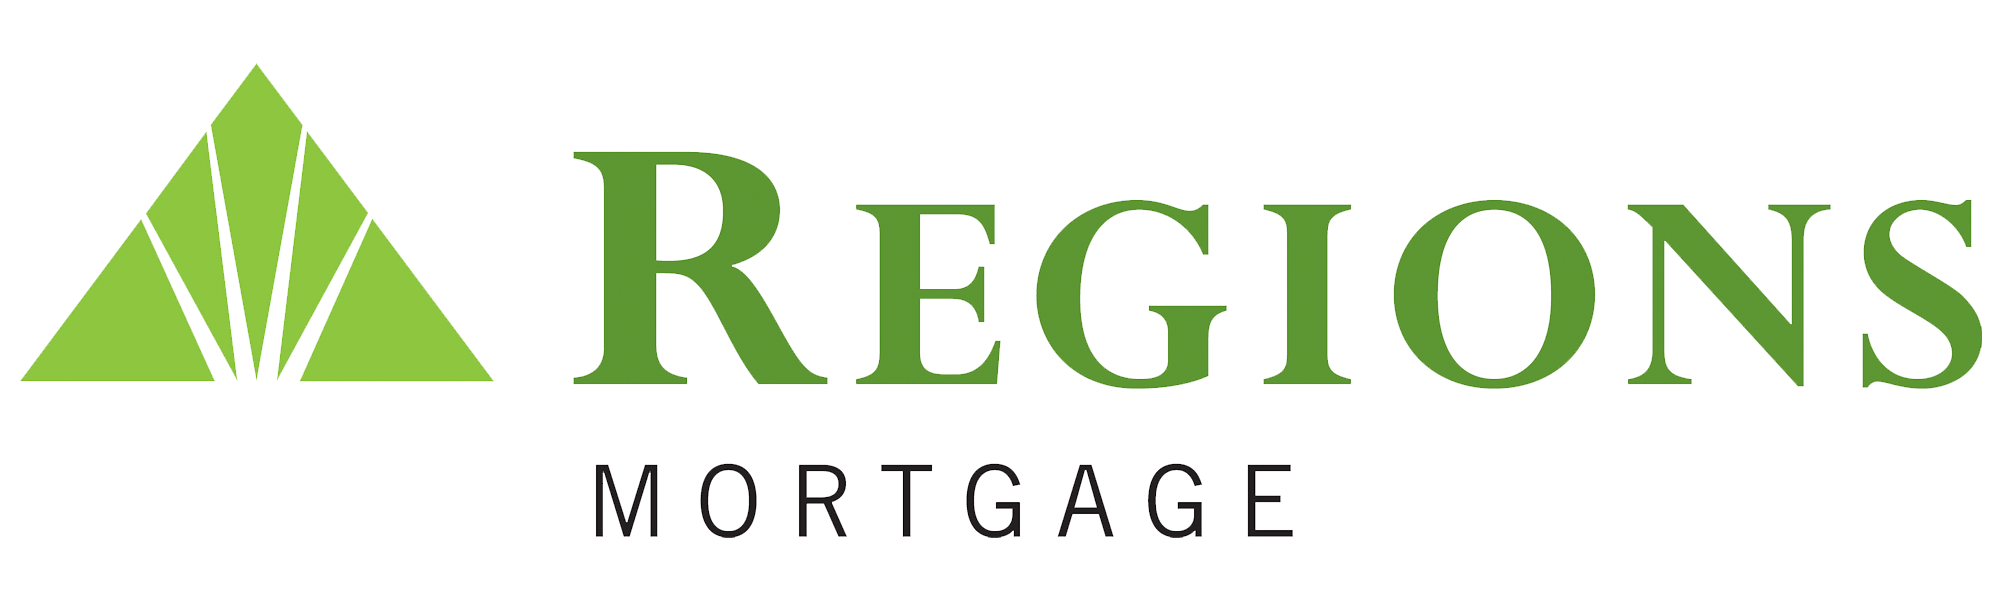 Regions Mortgage